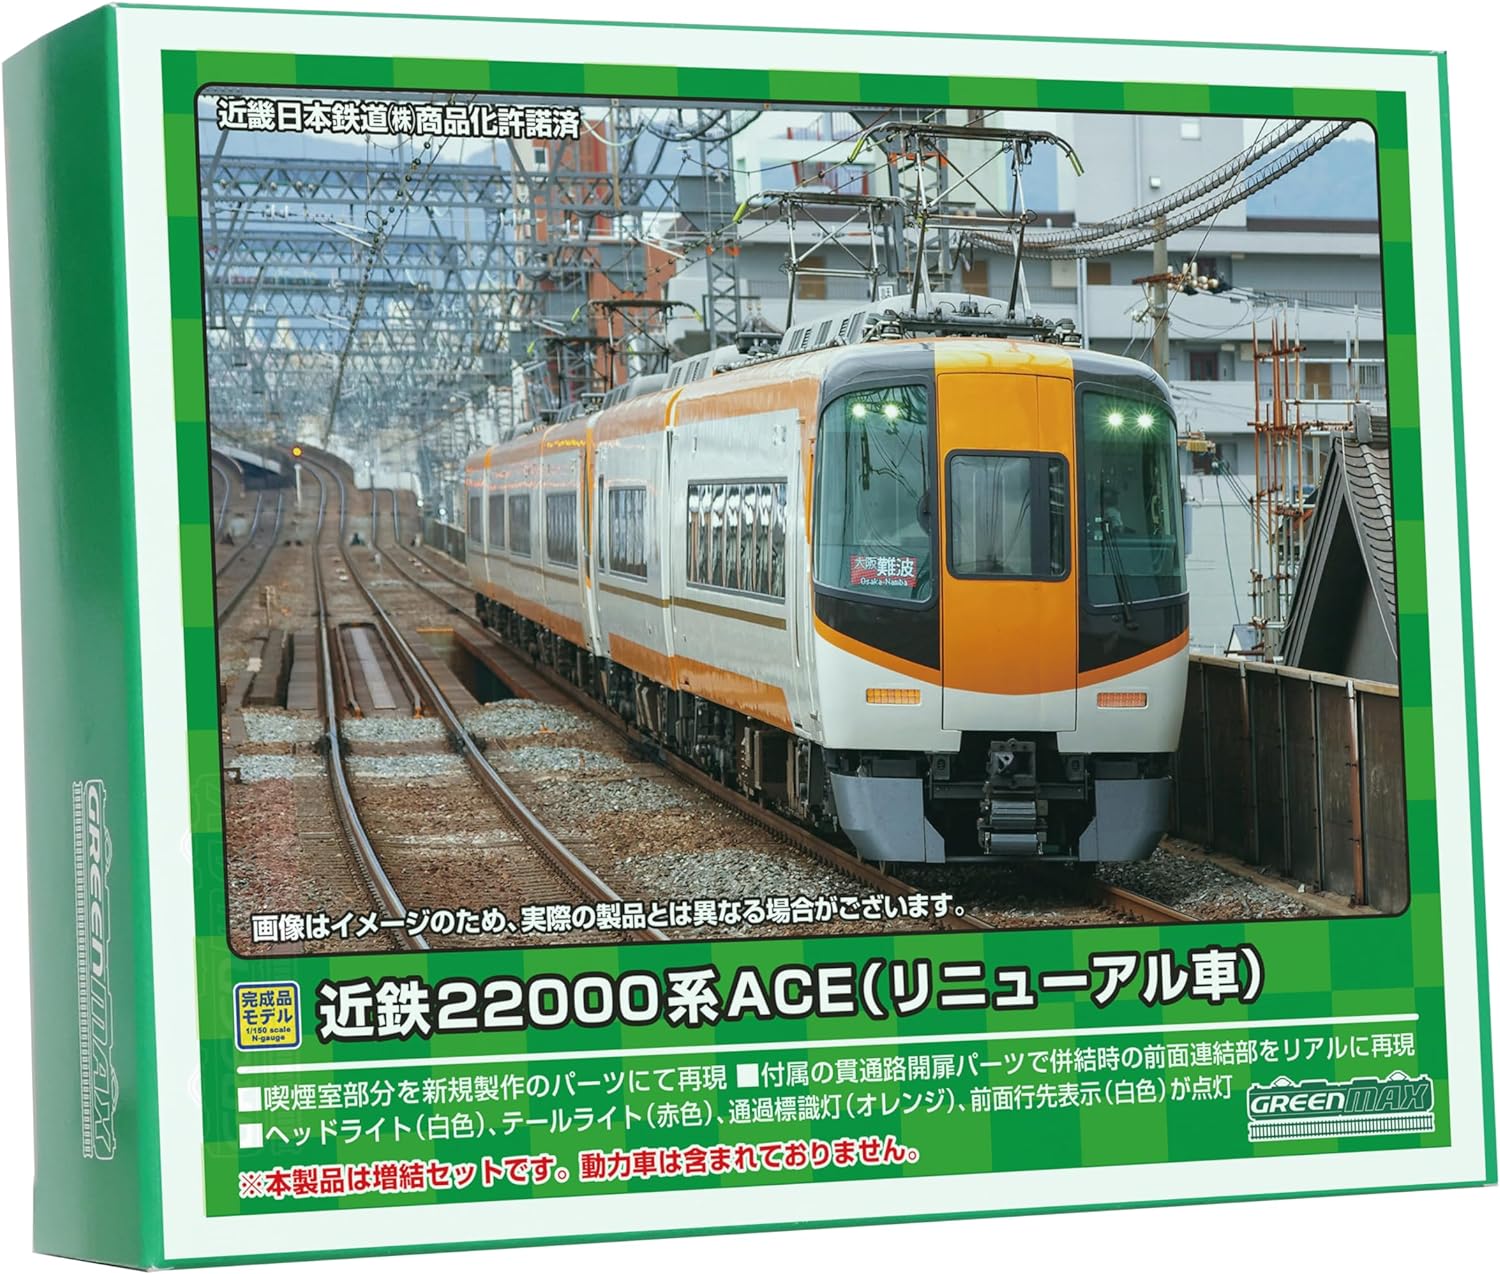 GreenMax 31793 N Gauge Kintetsu 22000 Series ACE (Renewal Car) 2-Car Extension Set (No Power) Railway Model Train - BanzaiHobby